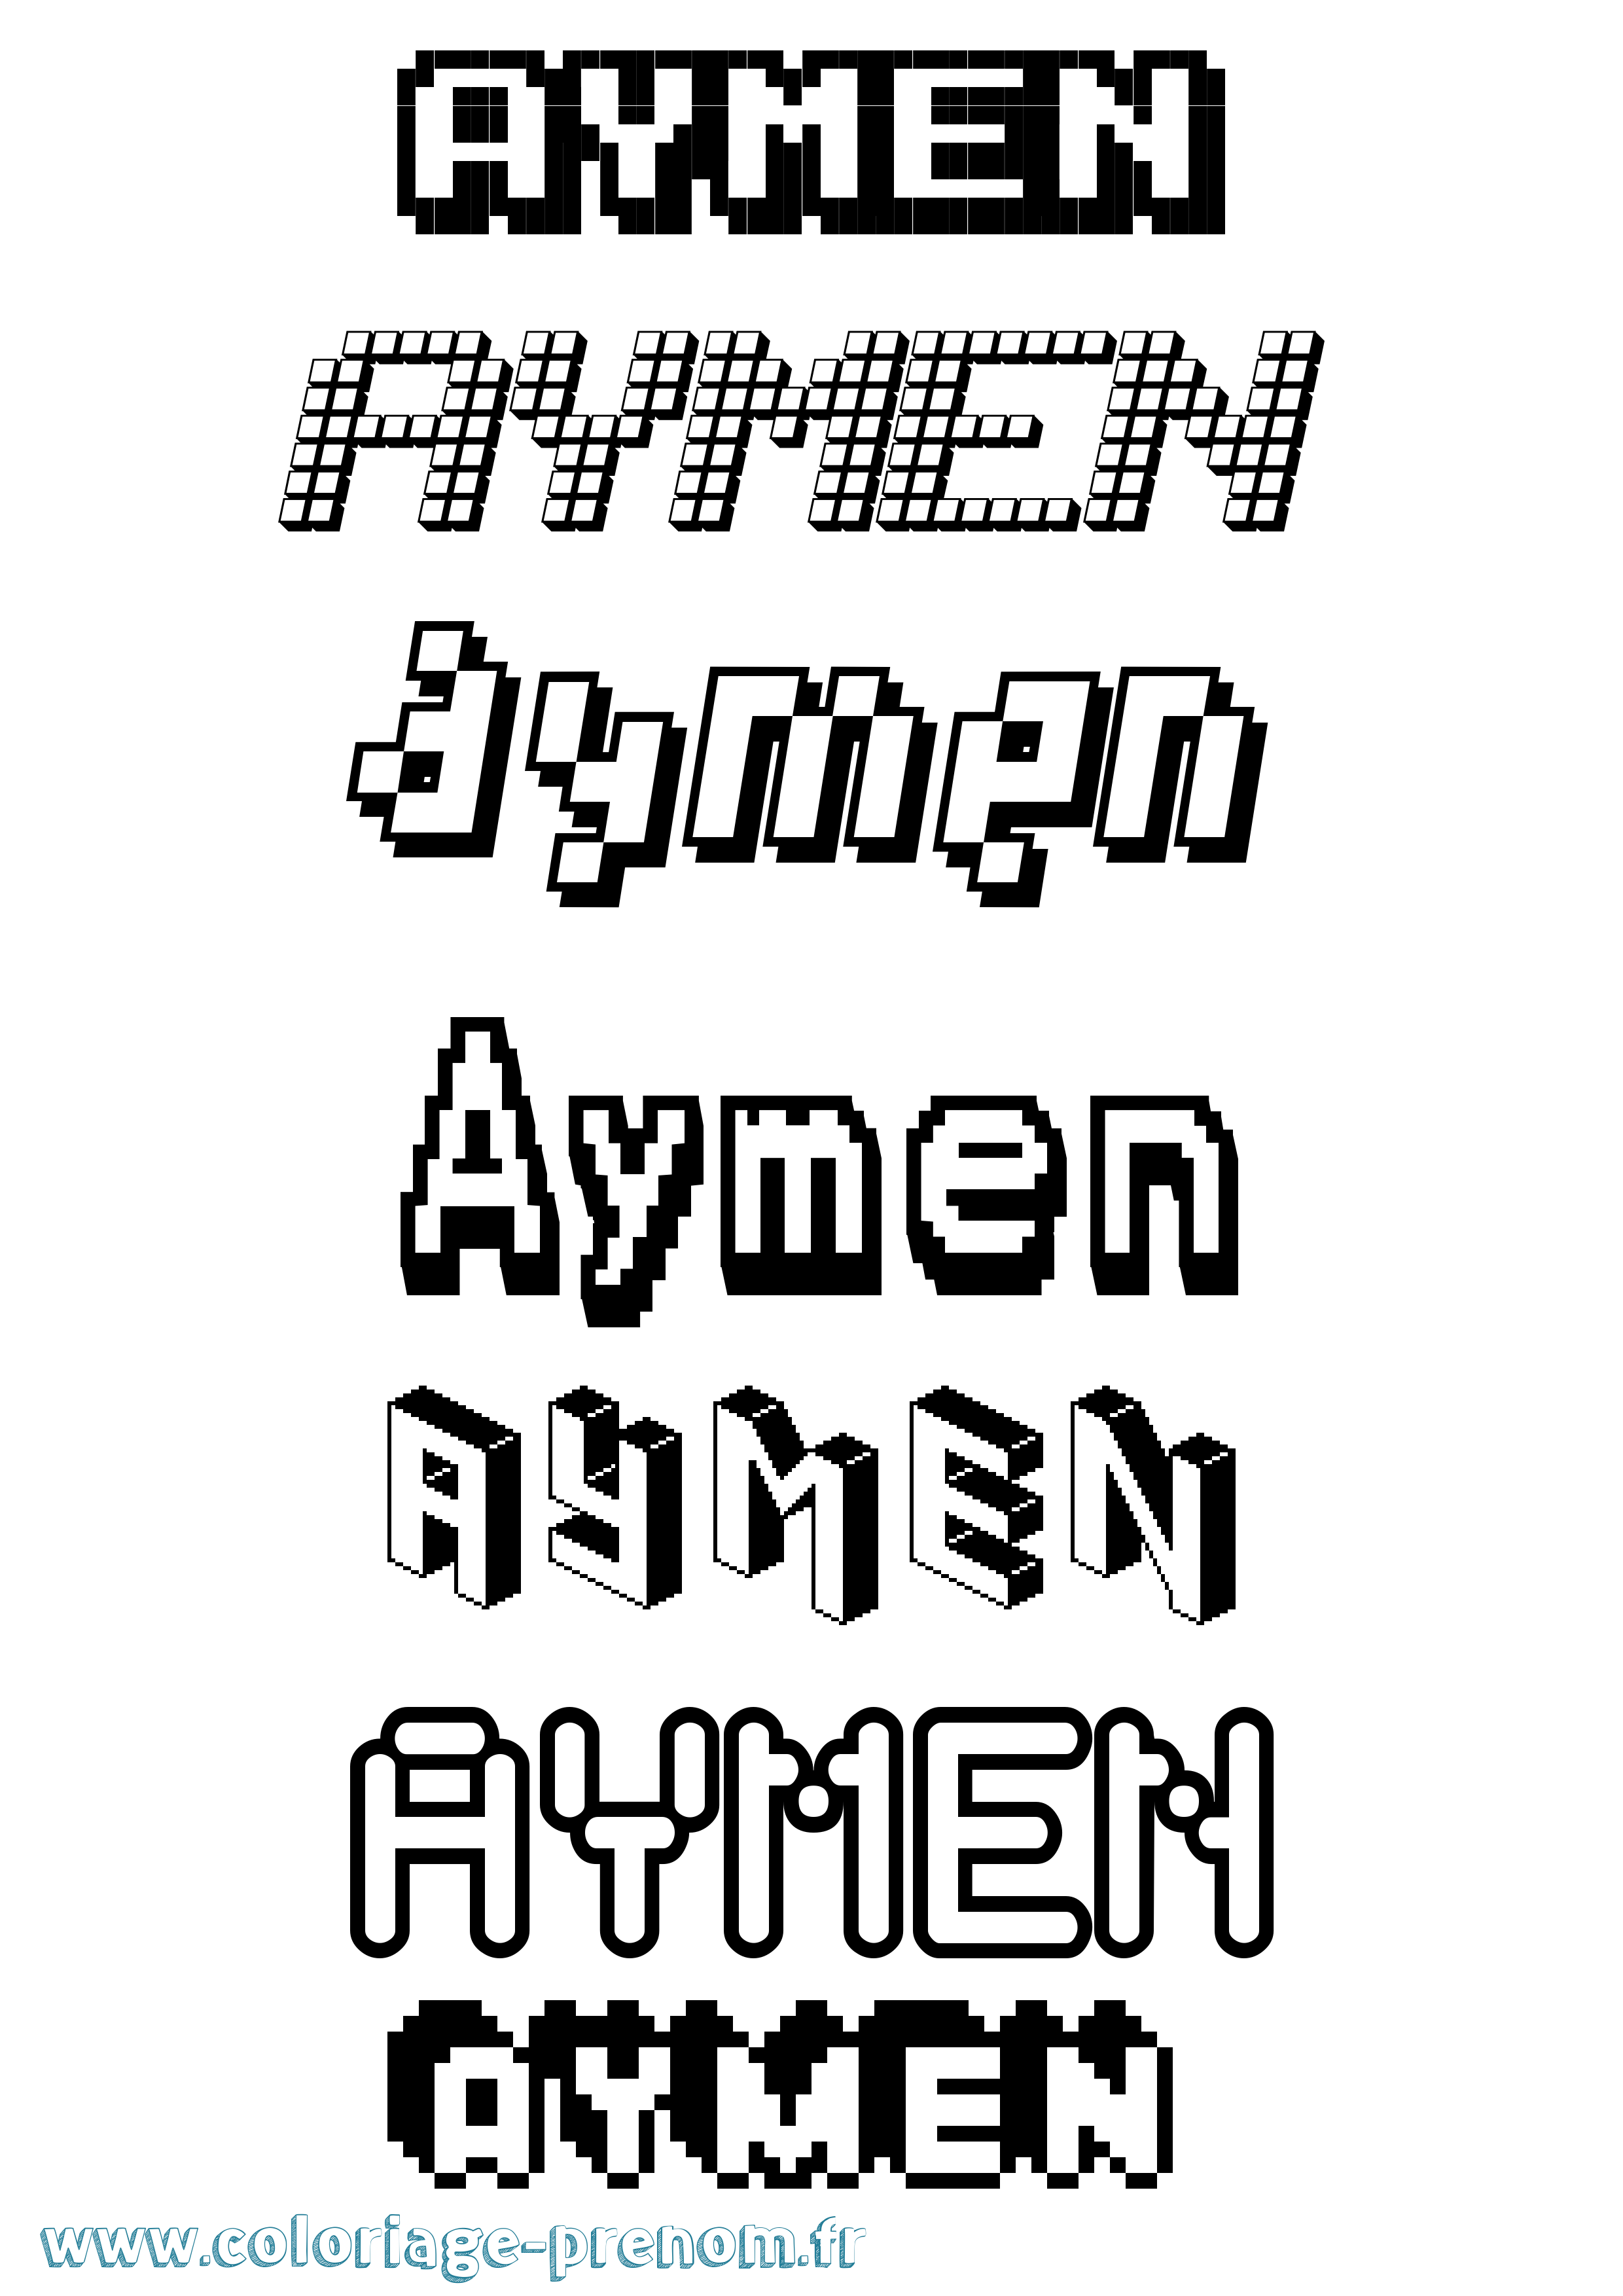 Coloriage prénom Aymen